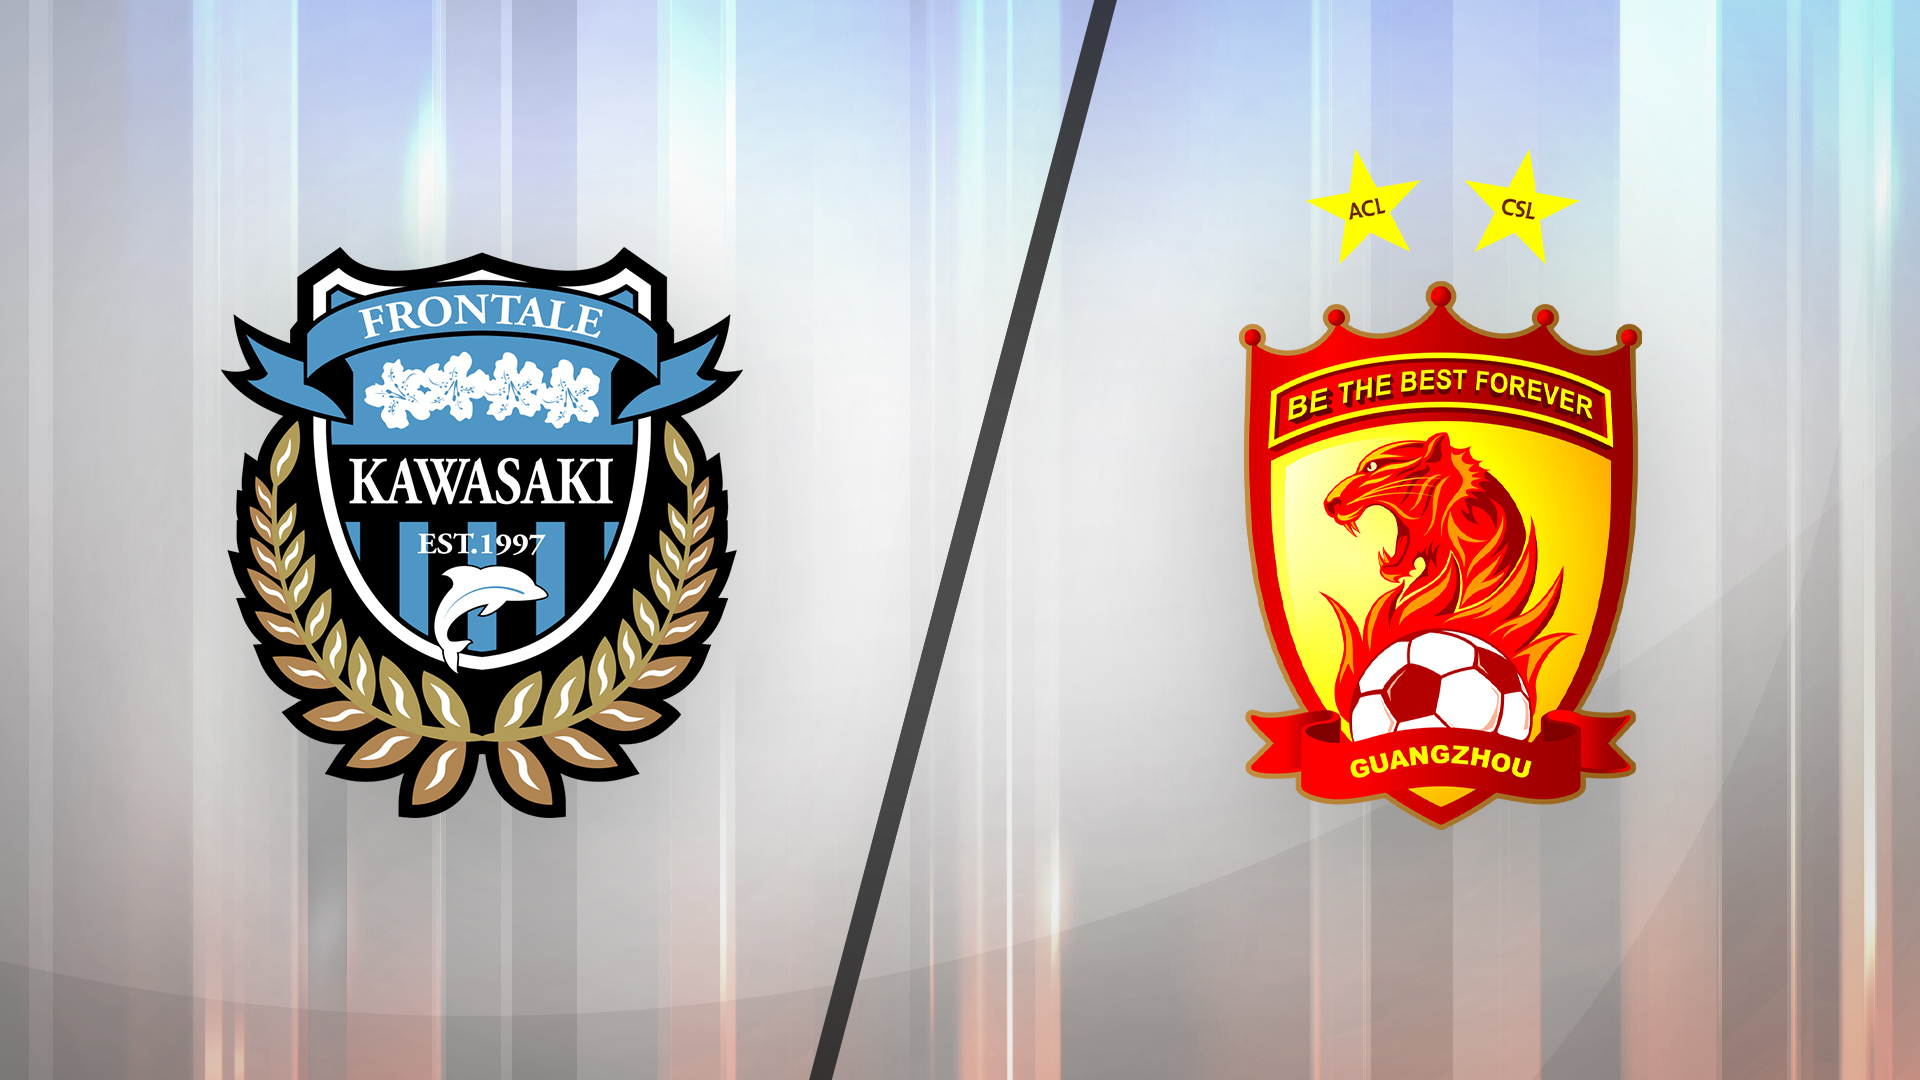 Watch Afc Champions League Season 22 Episode 106 Kawasaki Frontale Vs Guangzhou Full Show On Paramount Plus